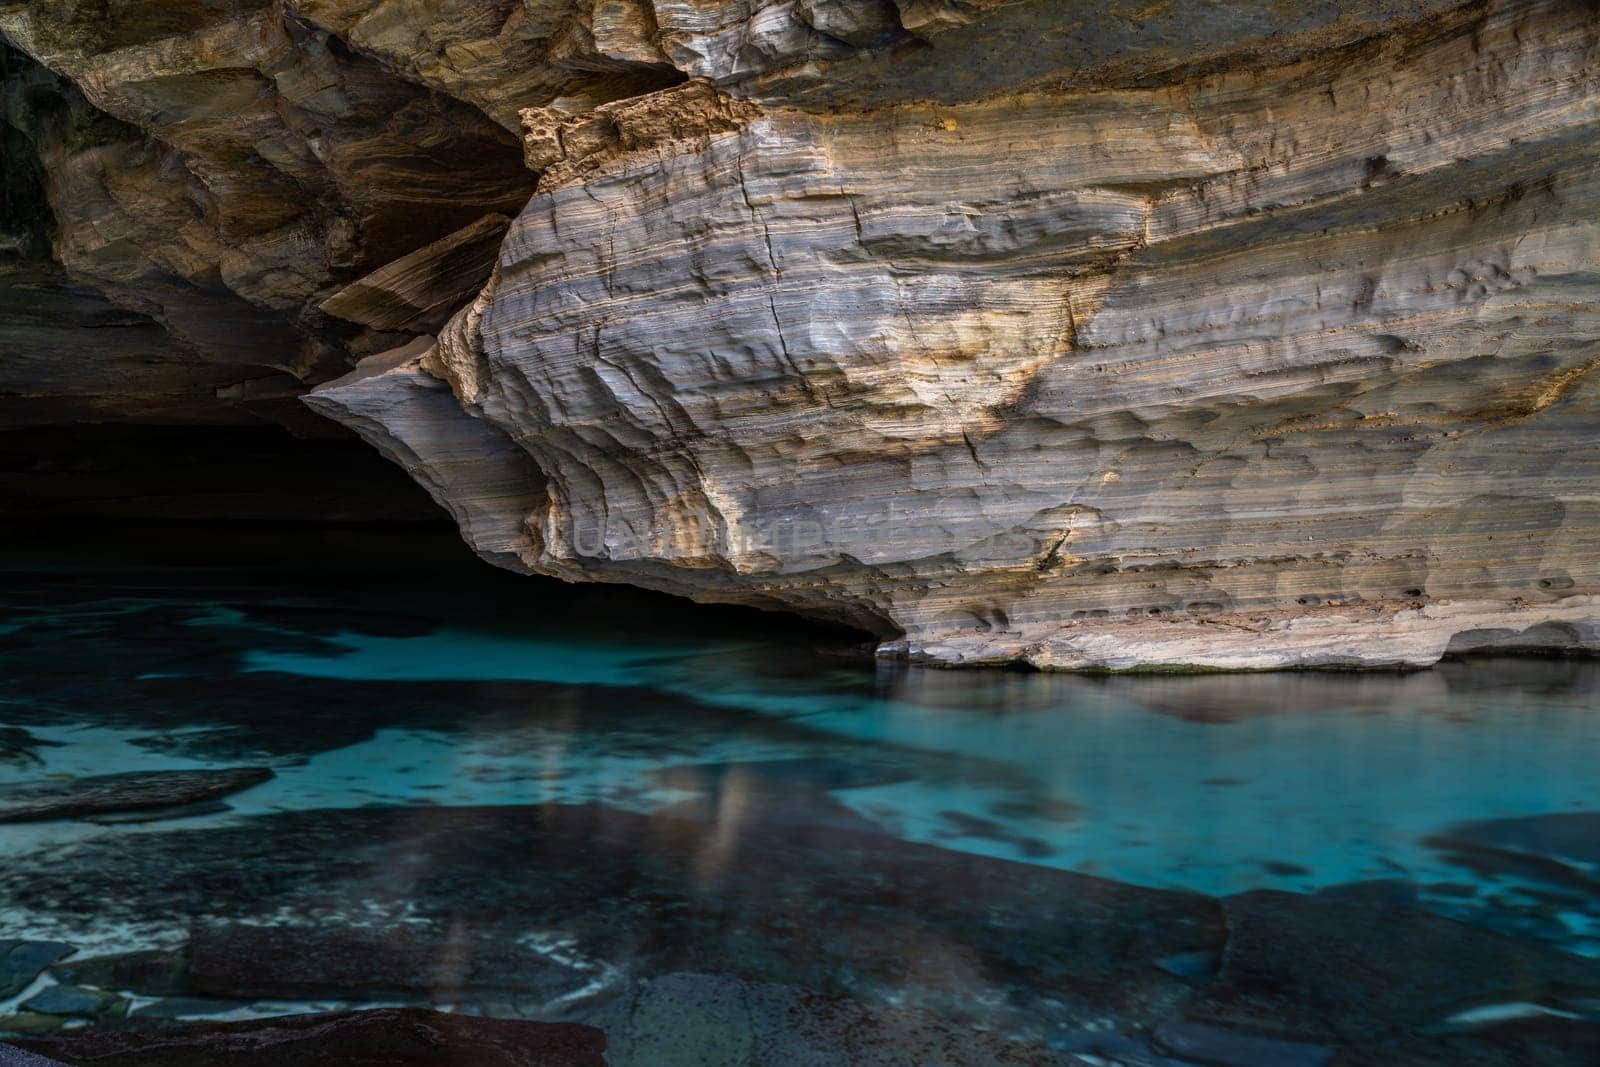 Serene Waters Beneath Ancient Stratified Rock Formations by FerradalFCG